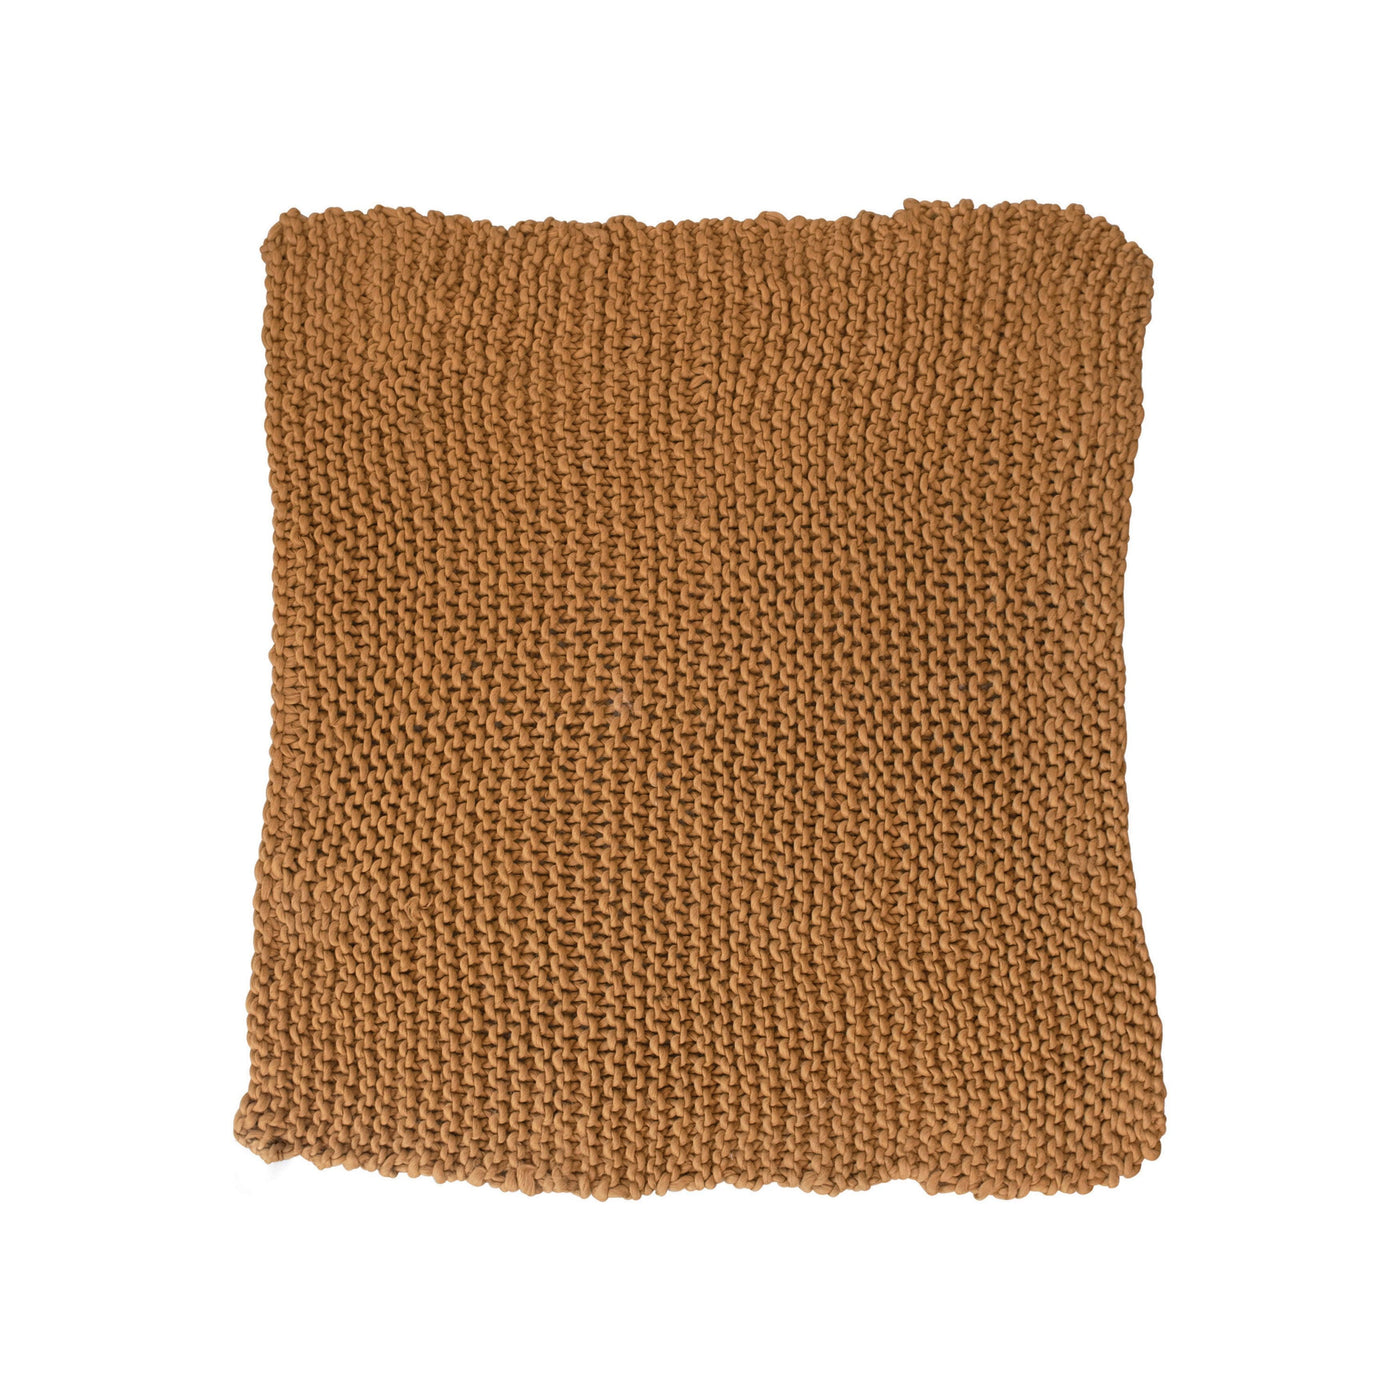 Crocheted Fabric Throw - Birch and Bind